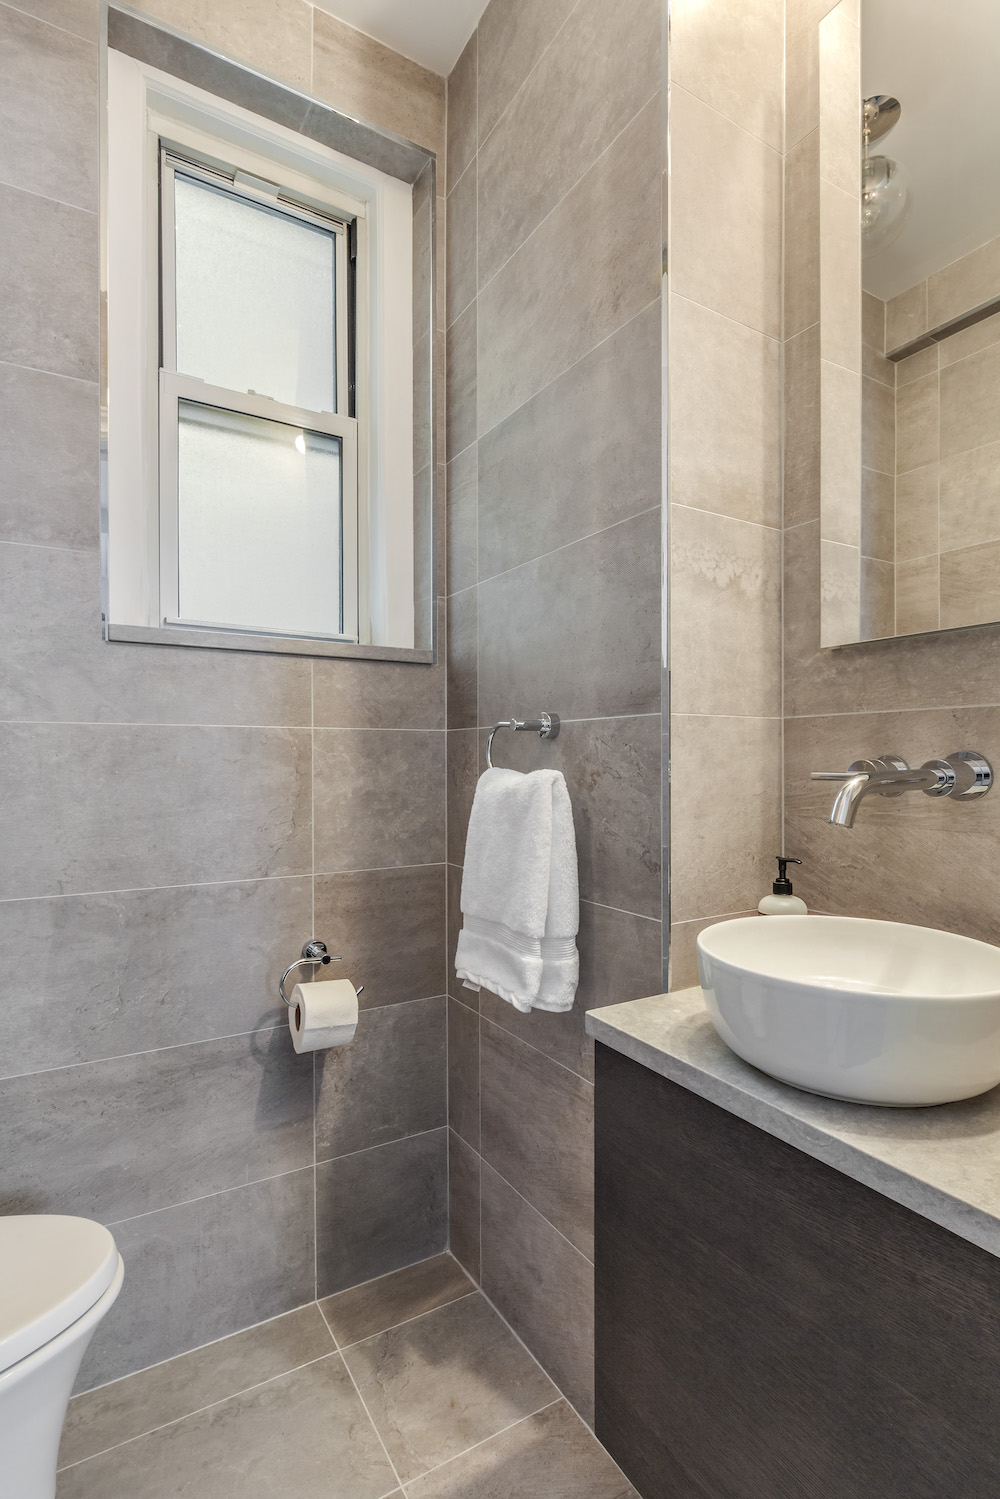 Stone tiled bathroom with custom vanity